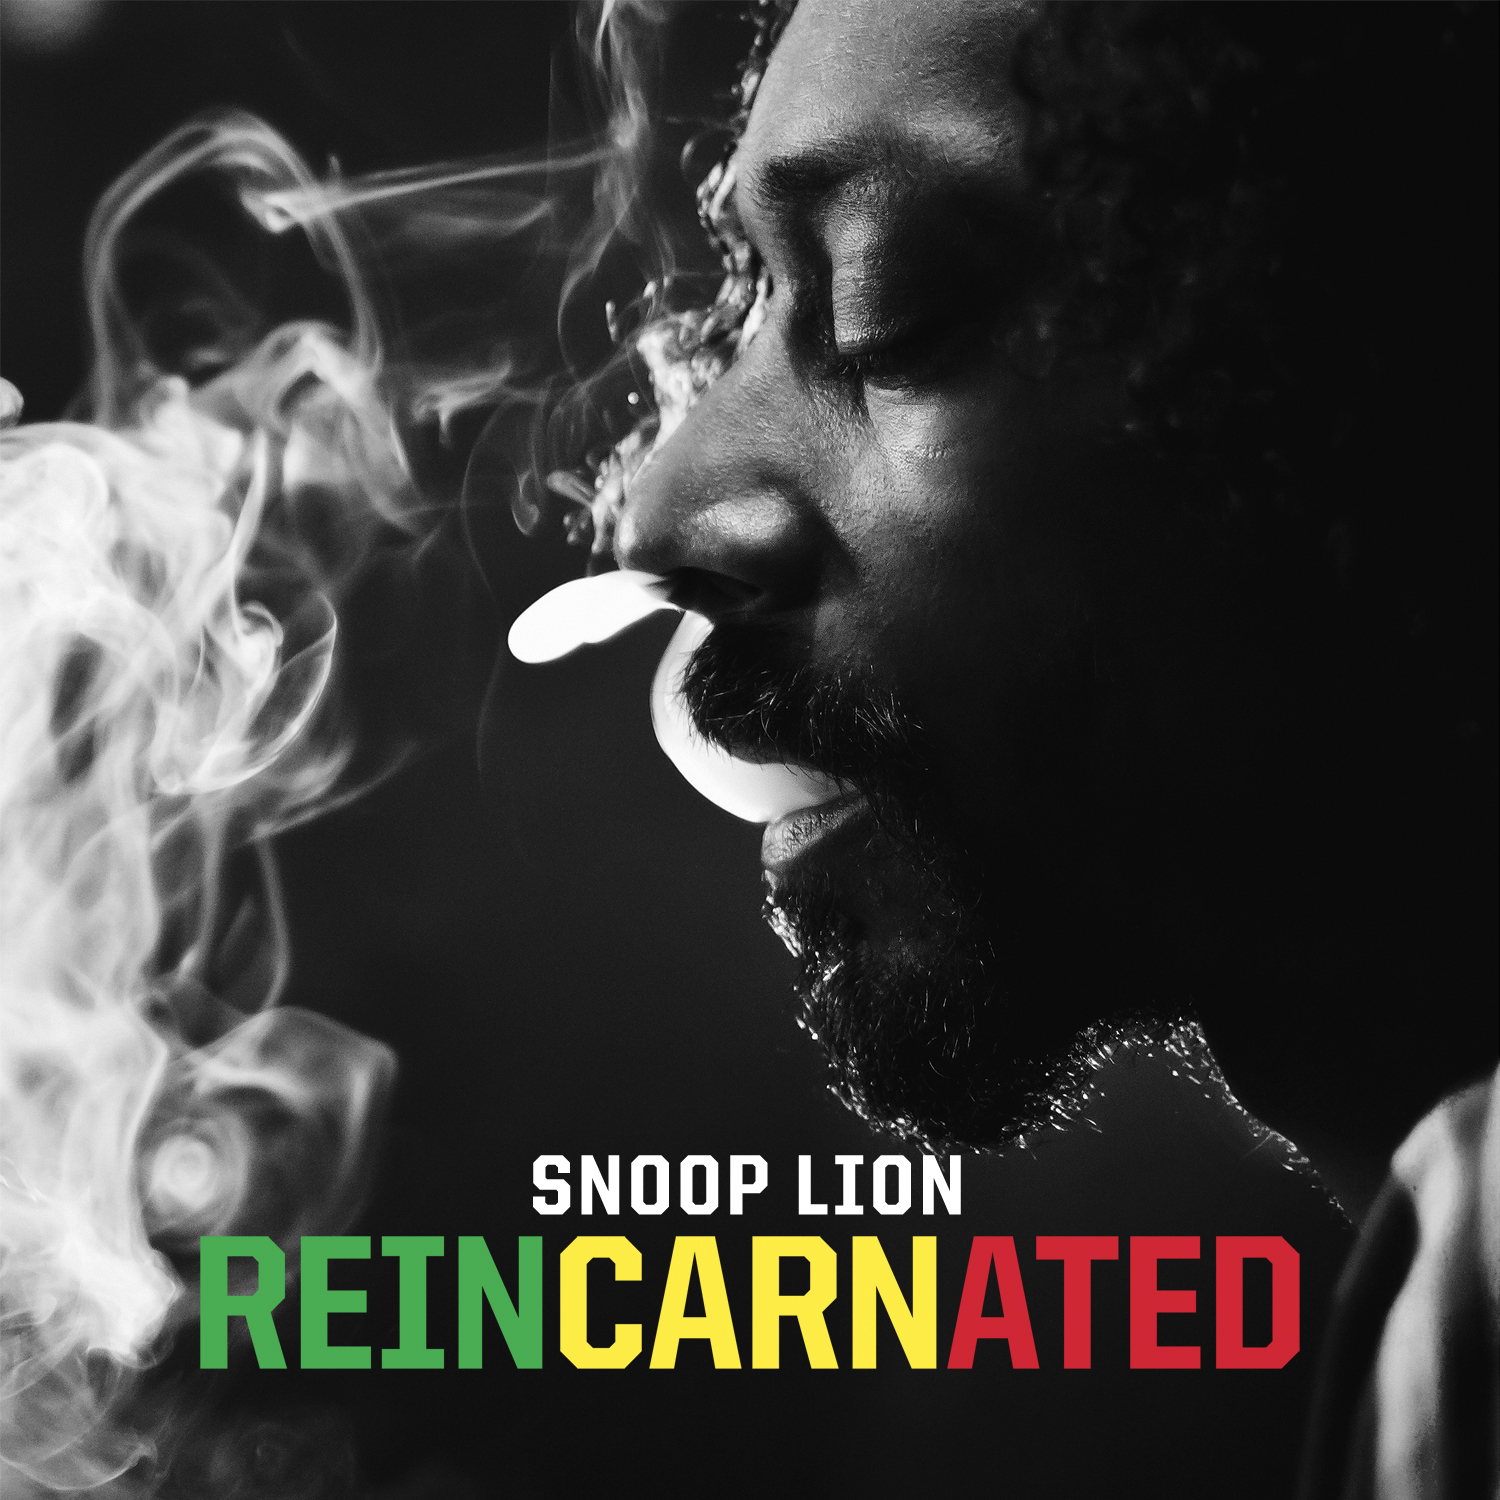 Jamaica, Snoop Lion, Snoop Dogg